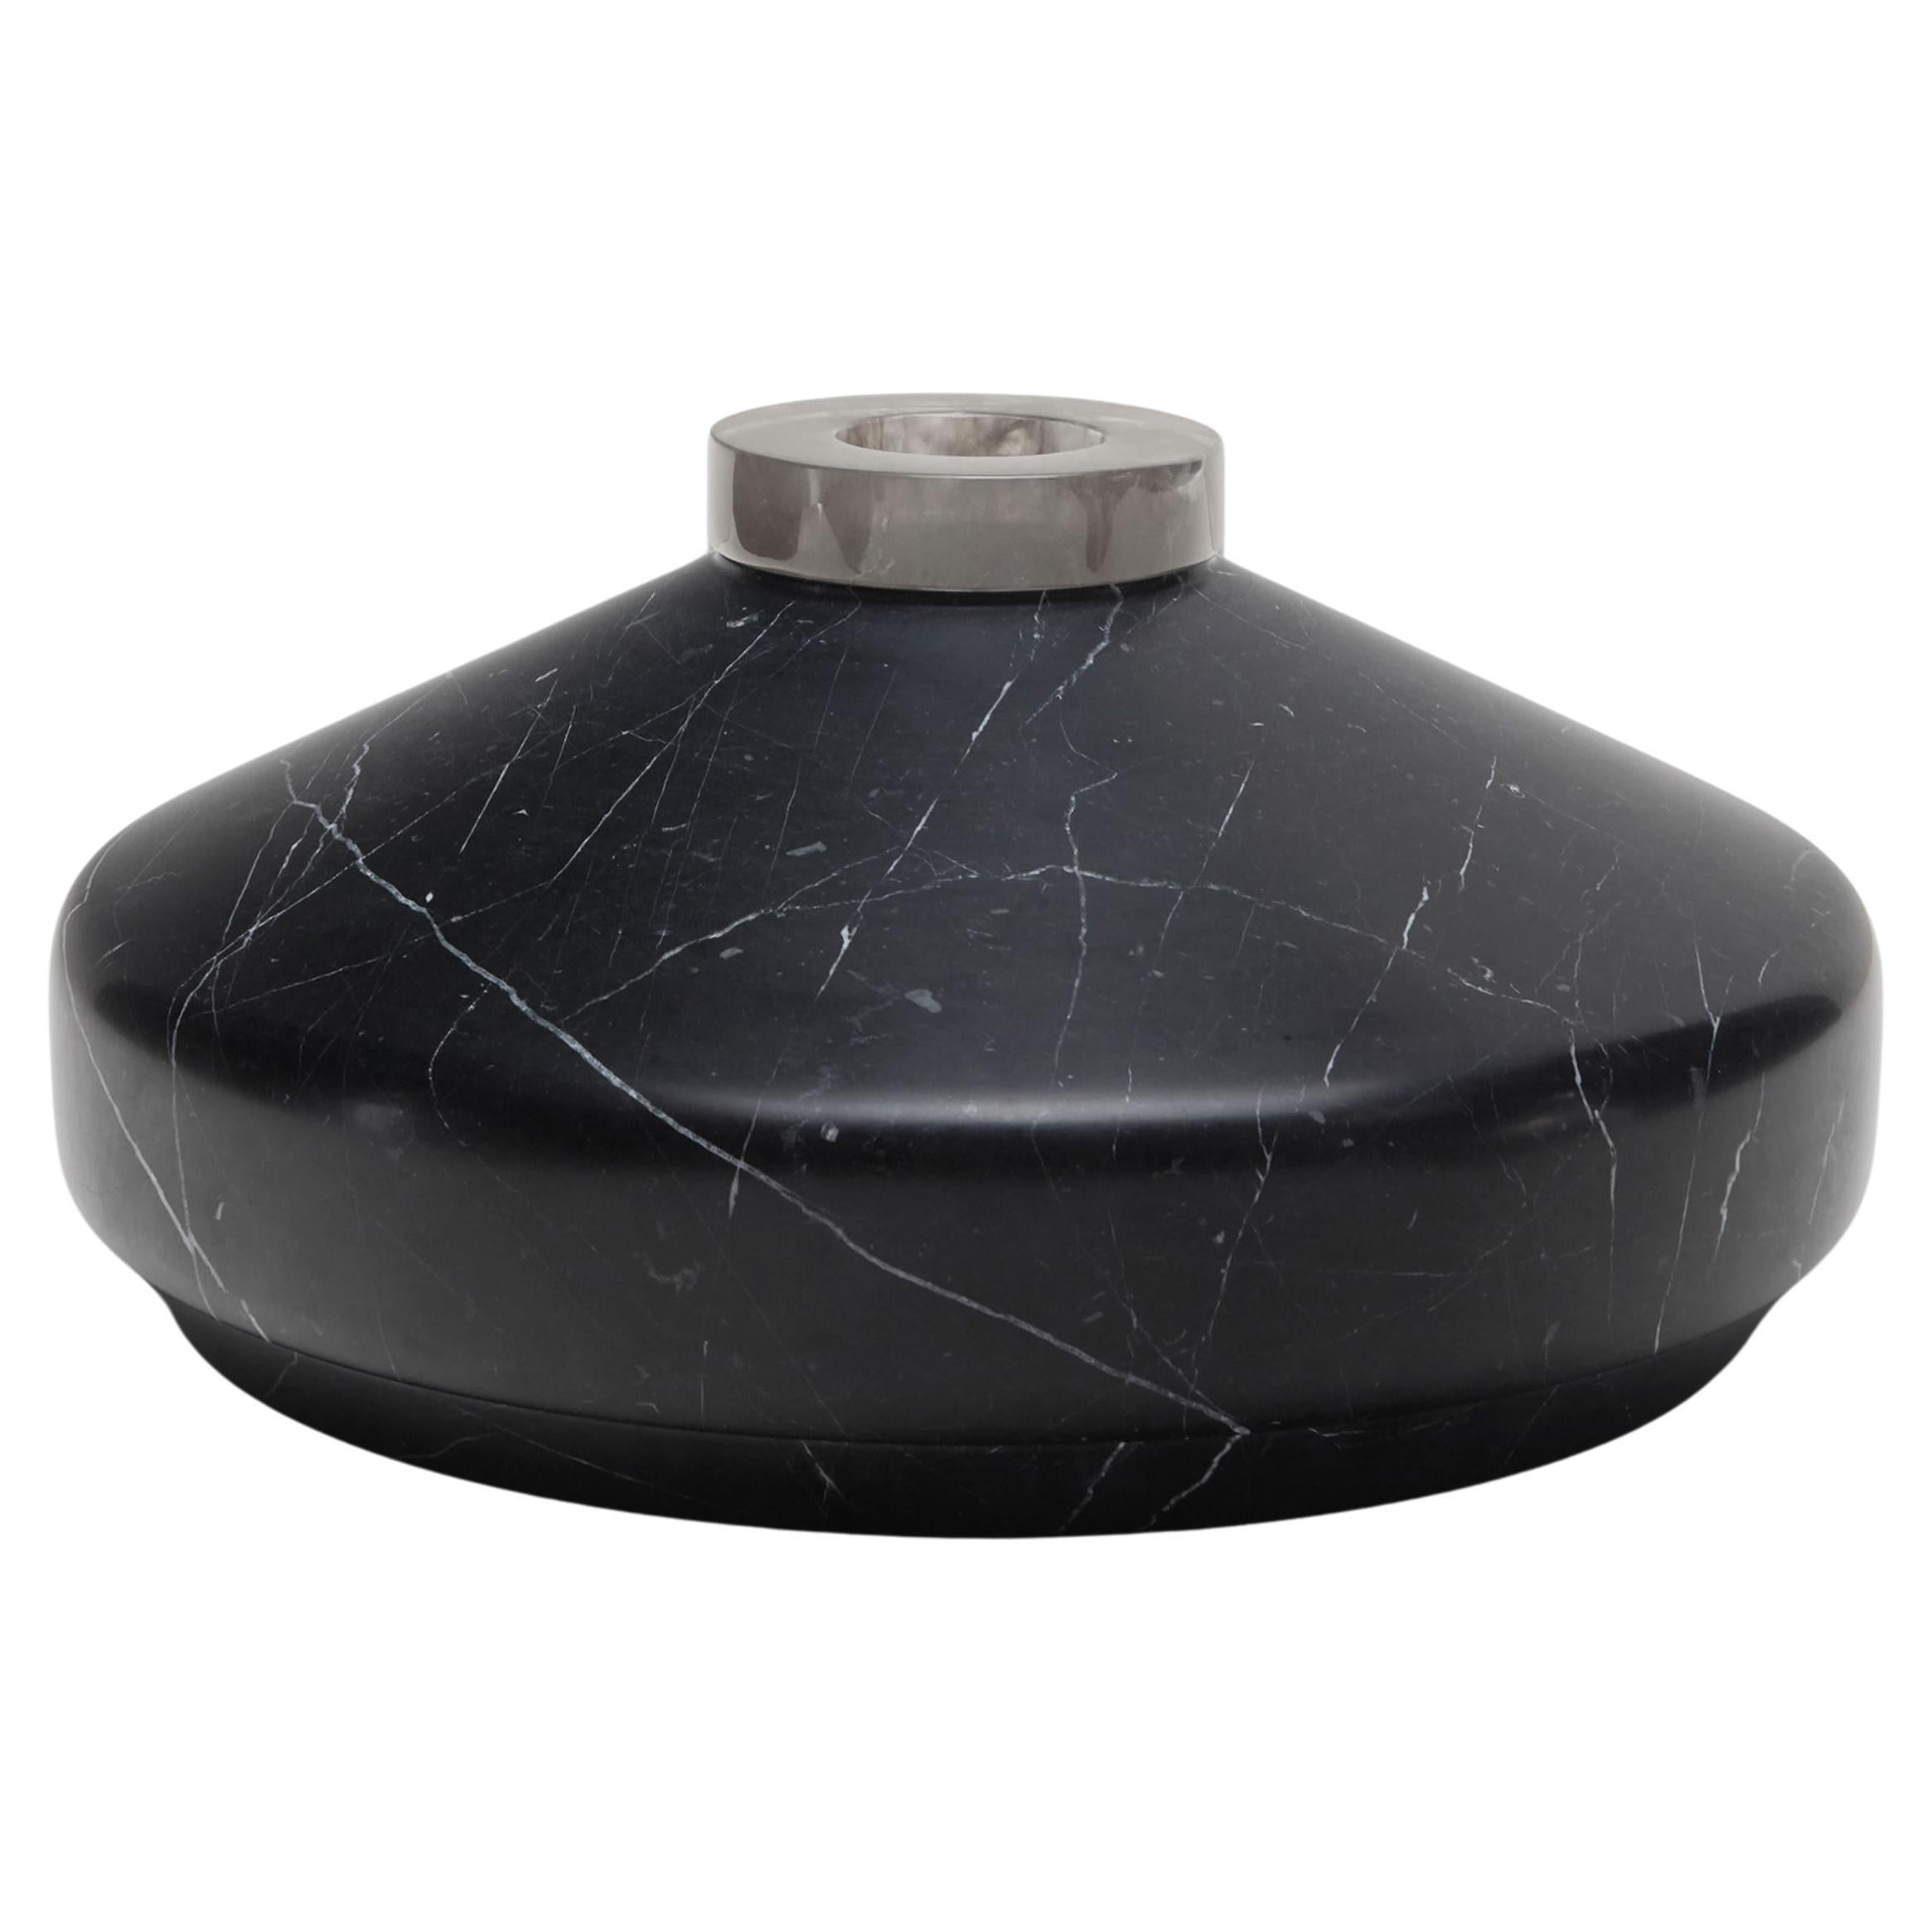 Black Marble Bottle Form Vase with Mocha Rock Crystal Accent by Gilles Caffier